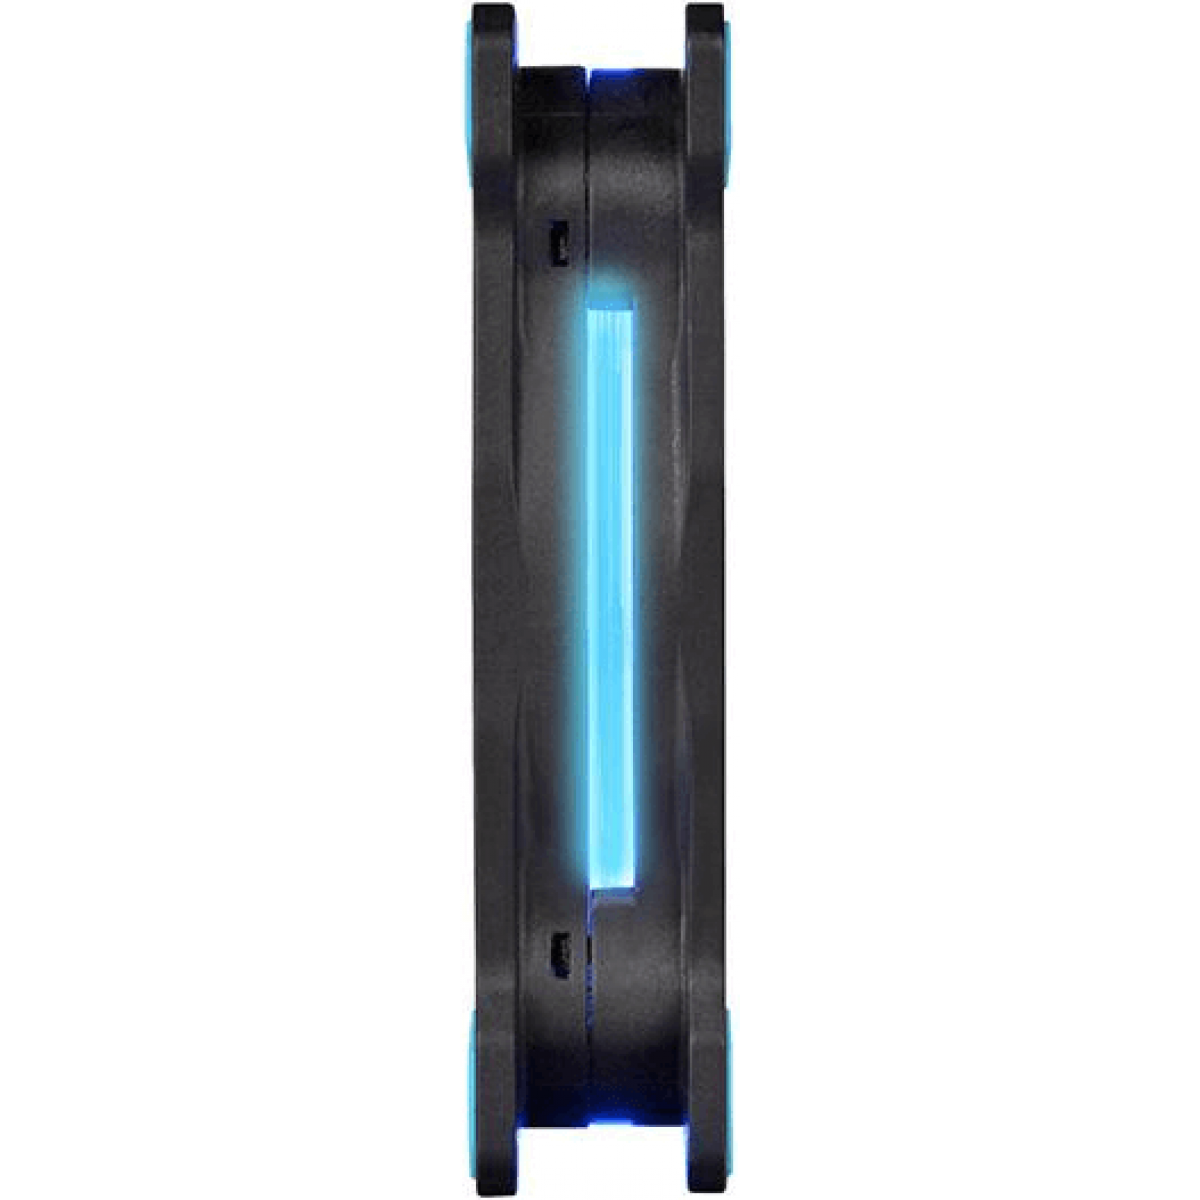 Cooler Thermaltake Riing 12 LED Blue CL-F038-PL12BU-A